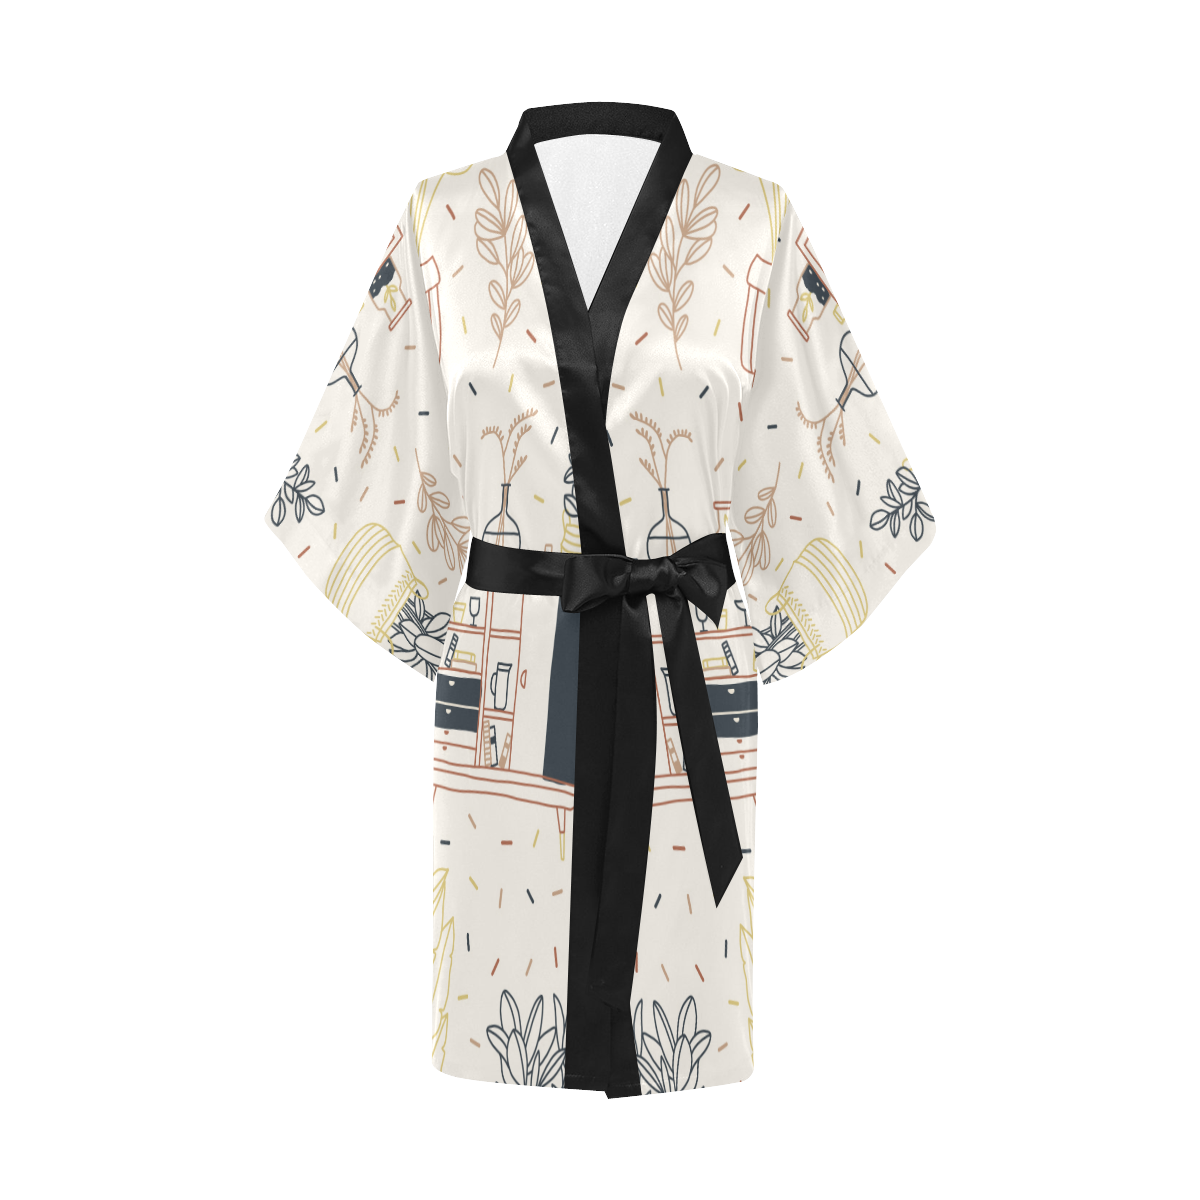 At Home Kimono Robe